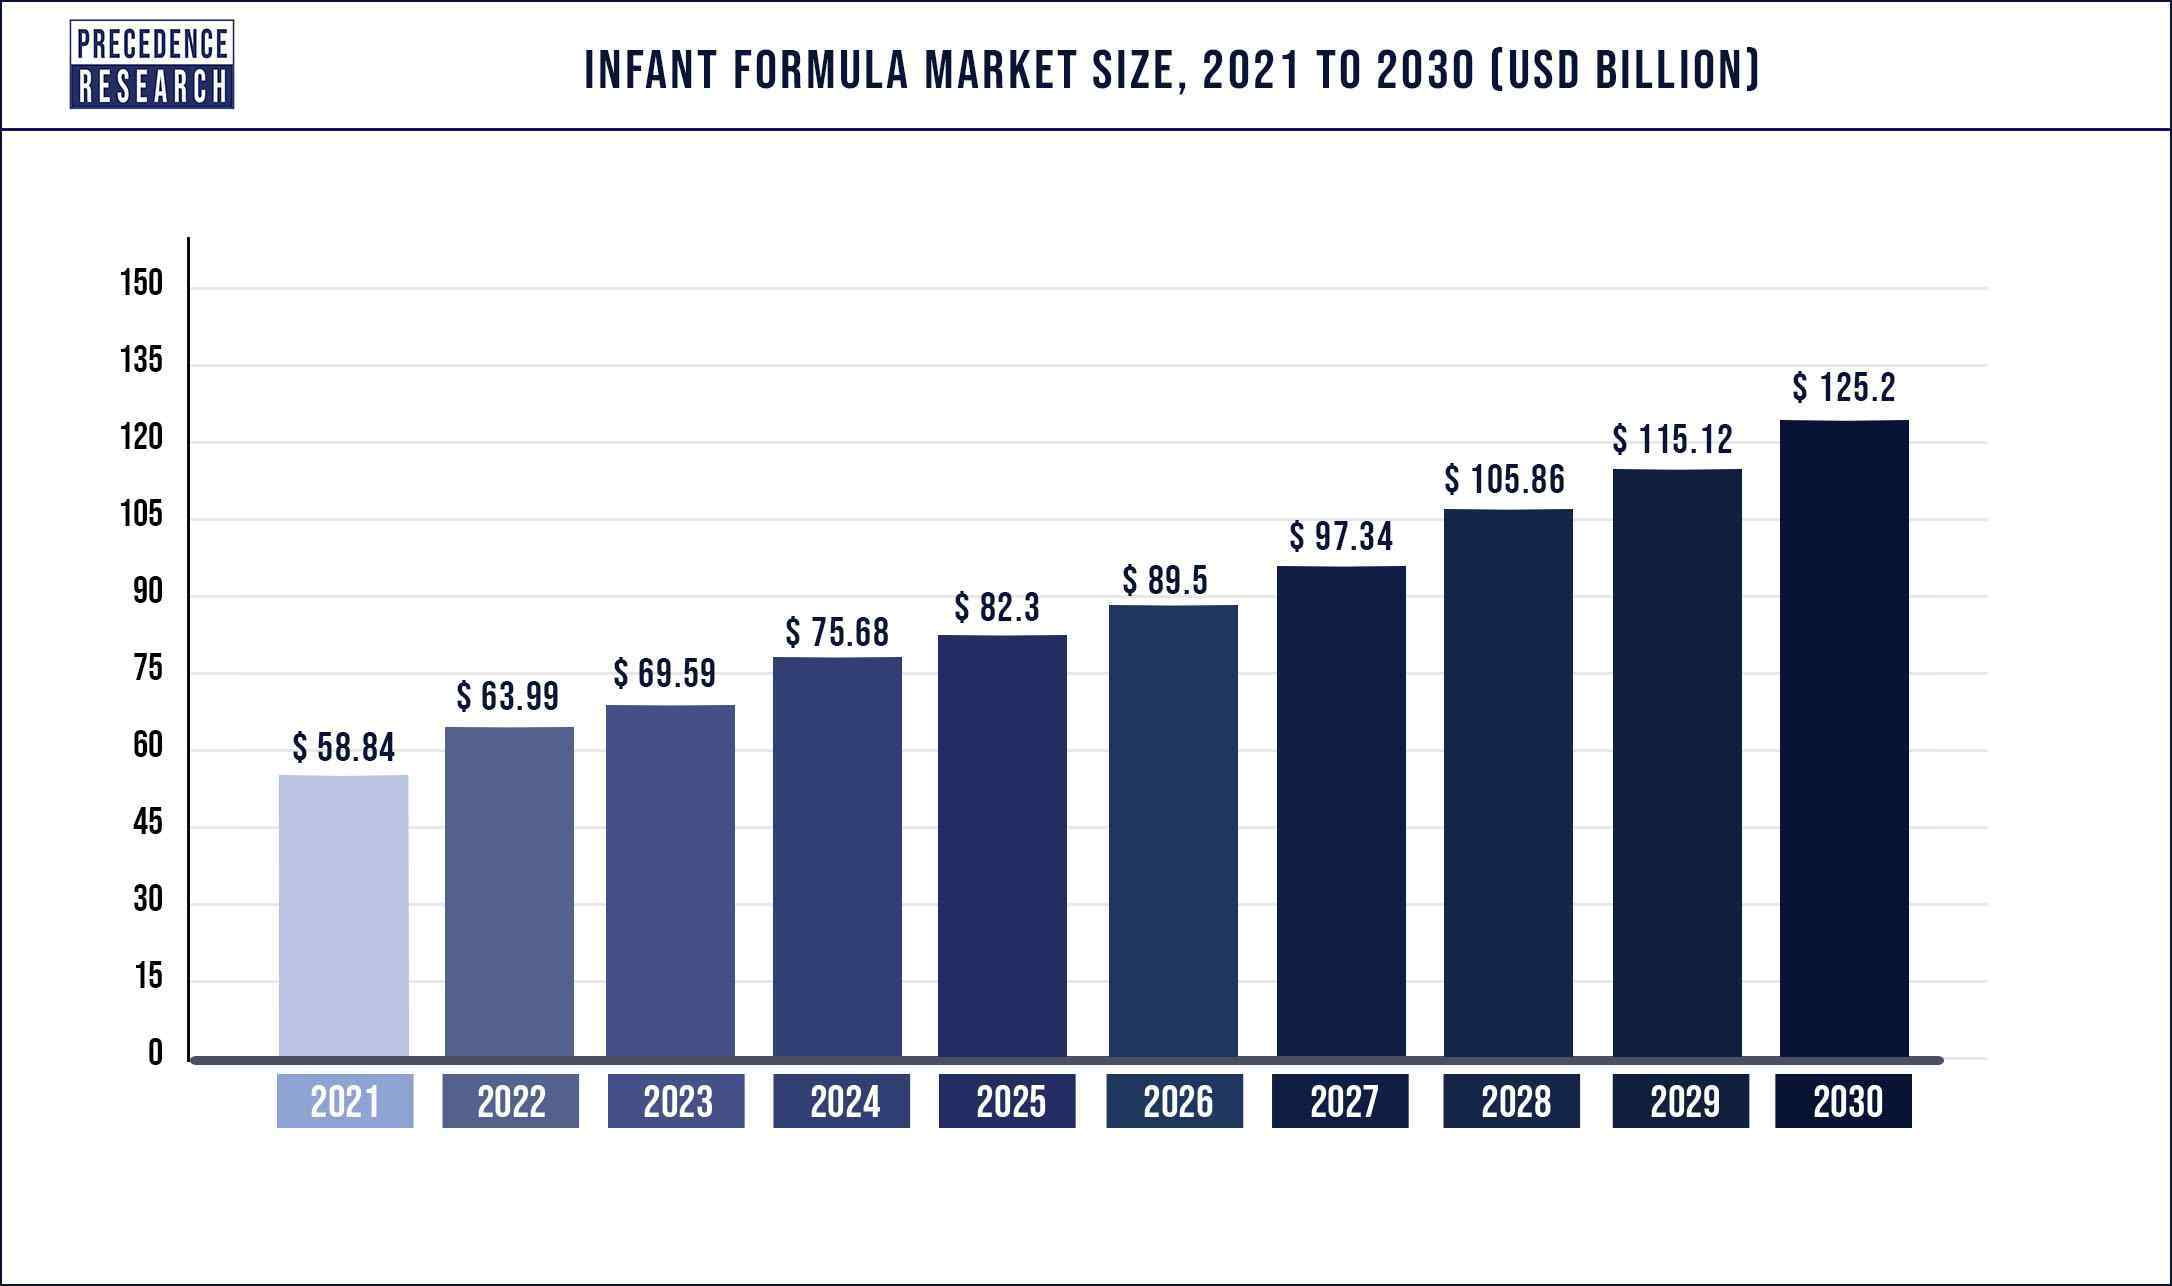 Infant Formula Market Size 2021 to 2030